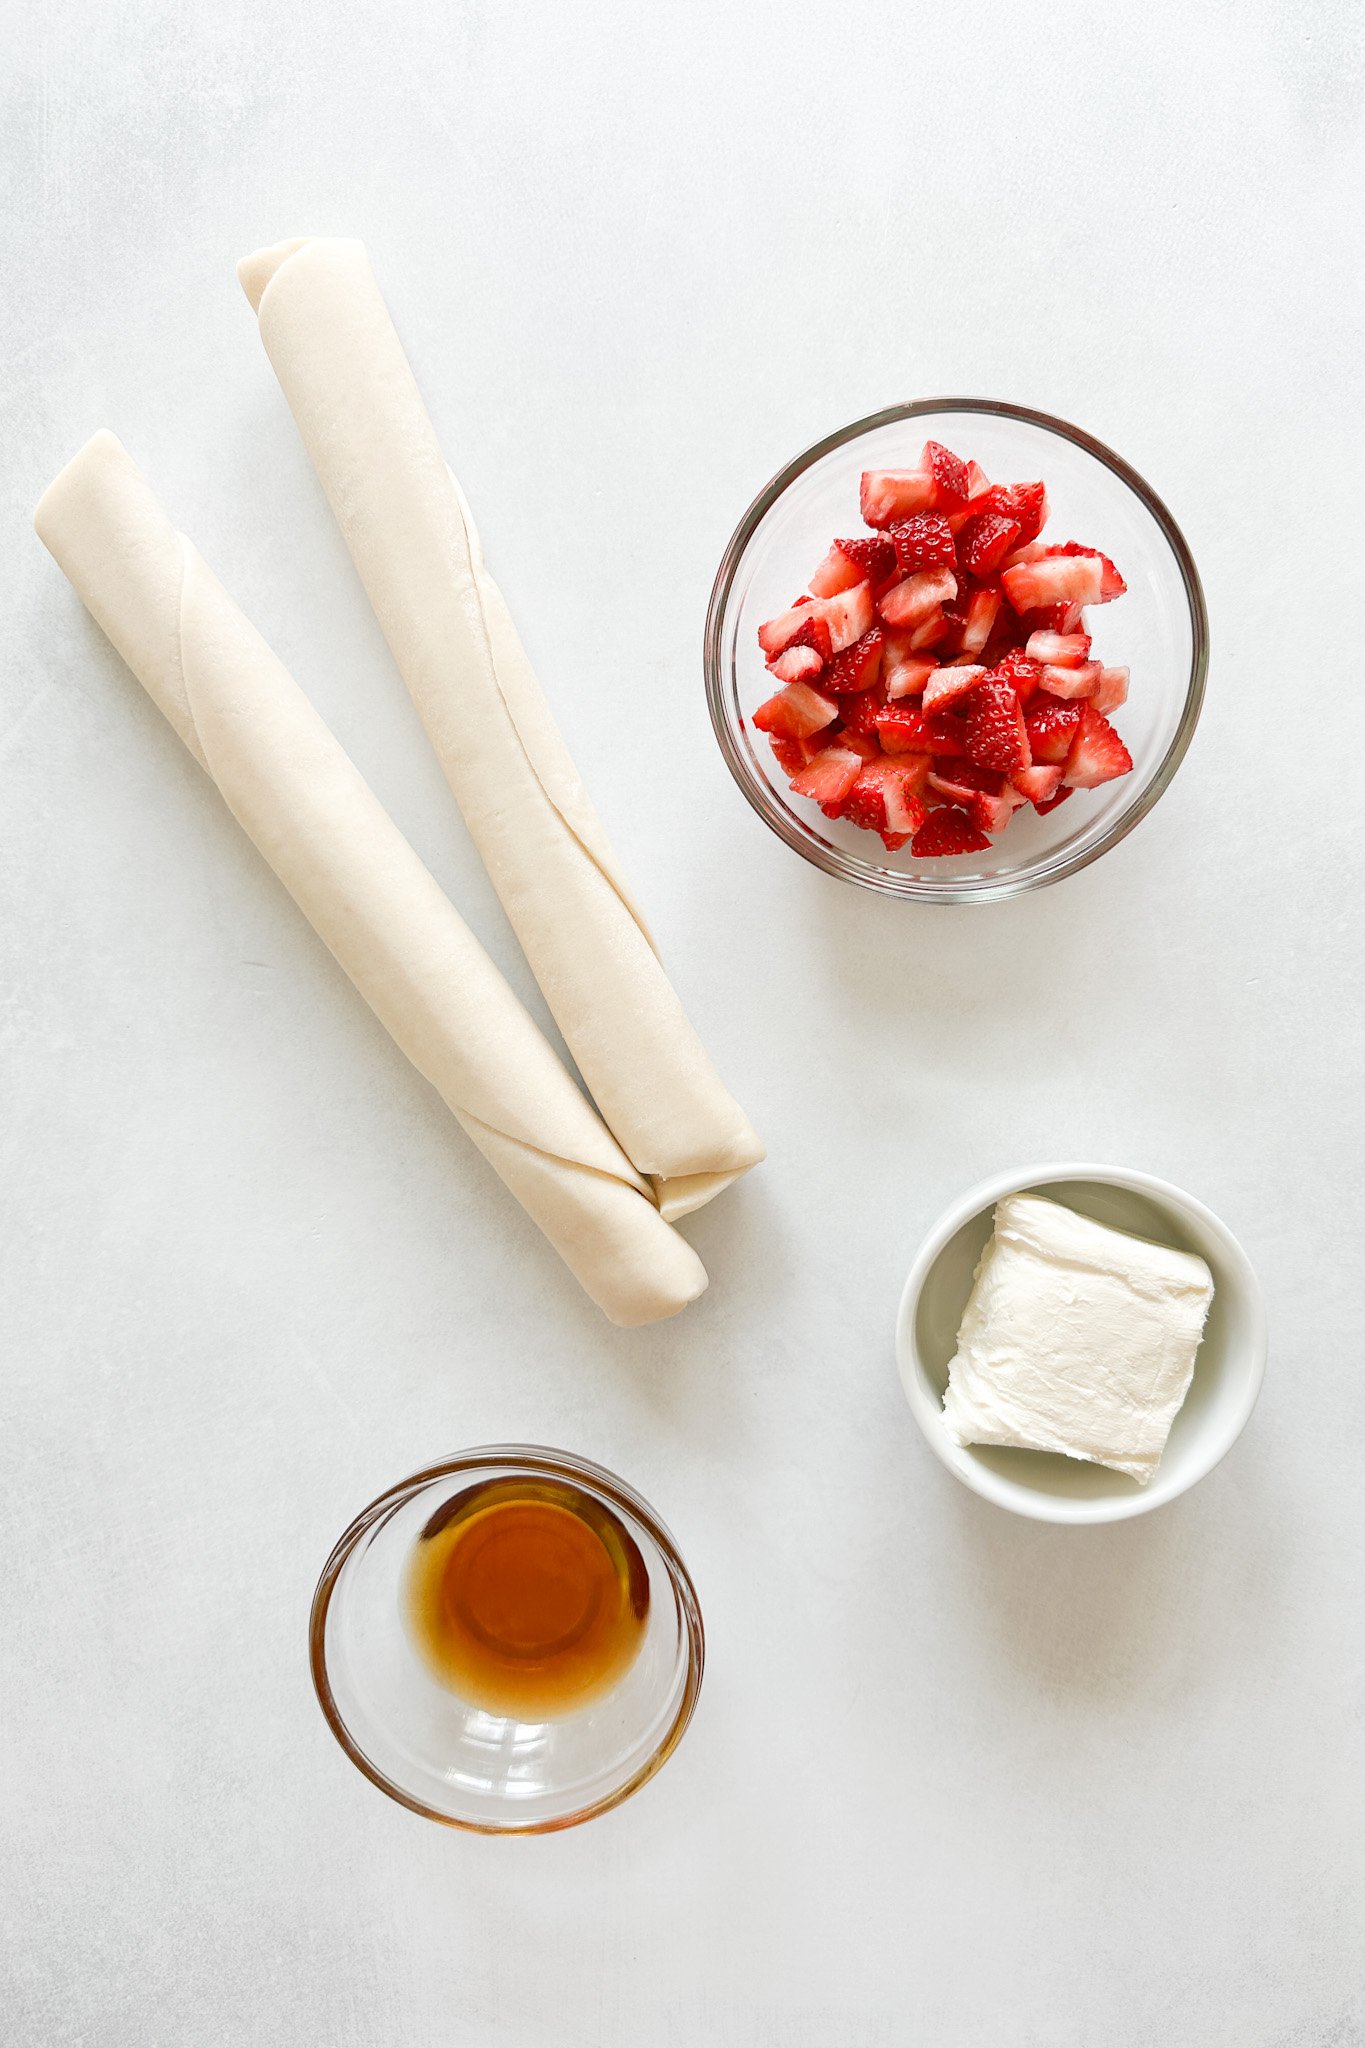 Ingredients to make strawberry cream cheese hand pies.